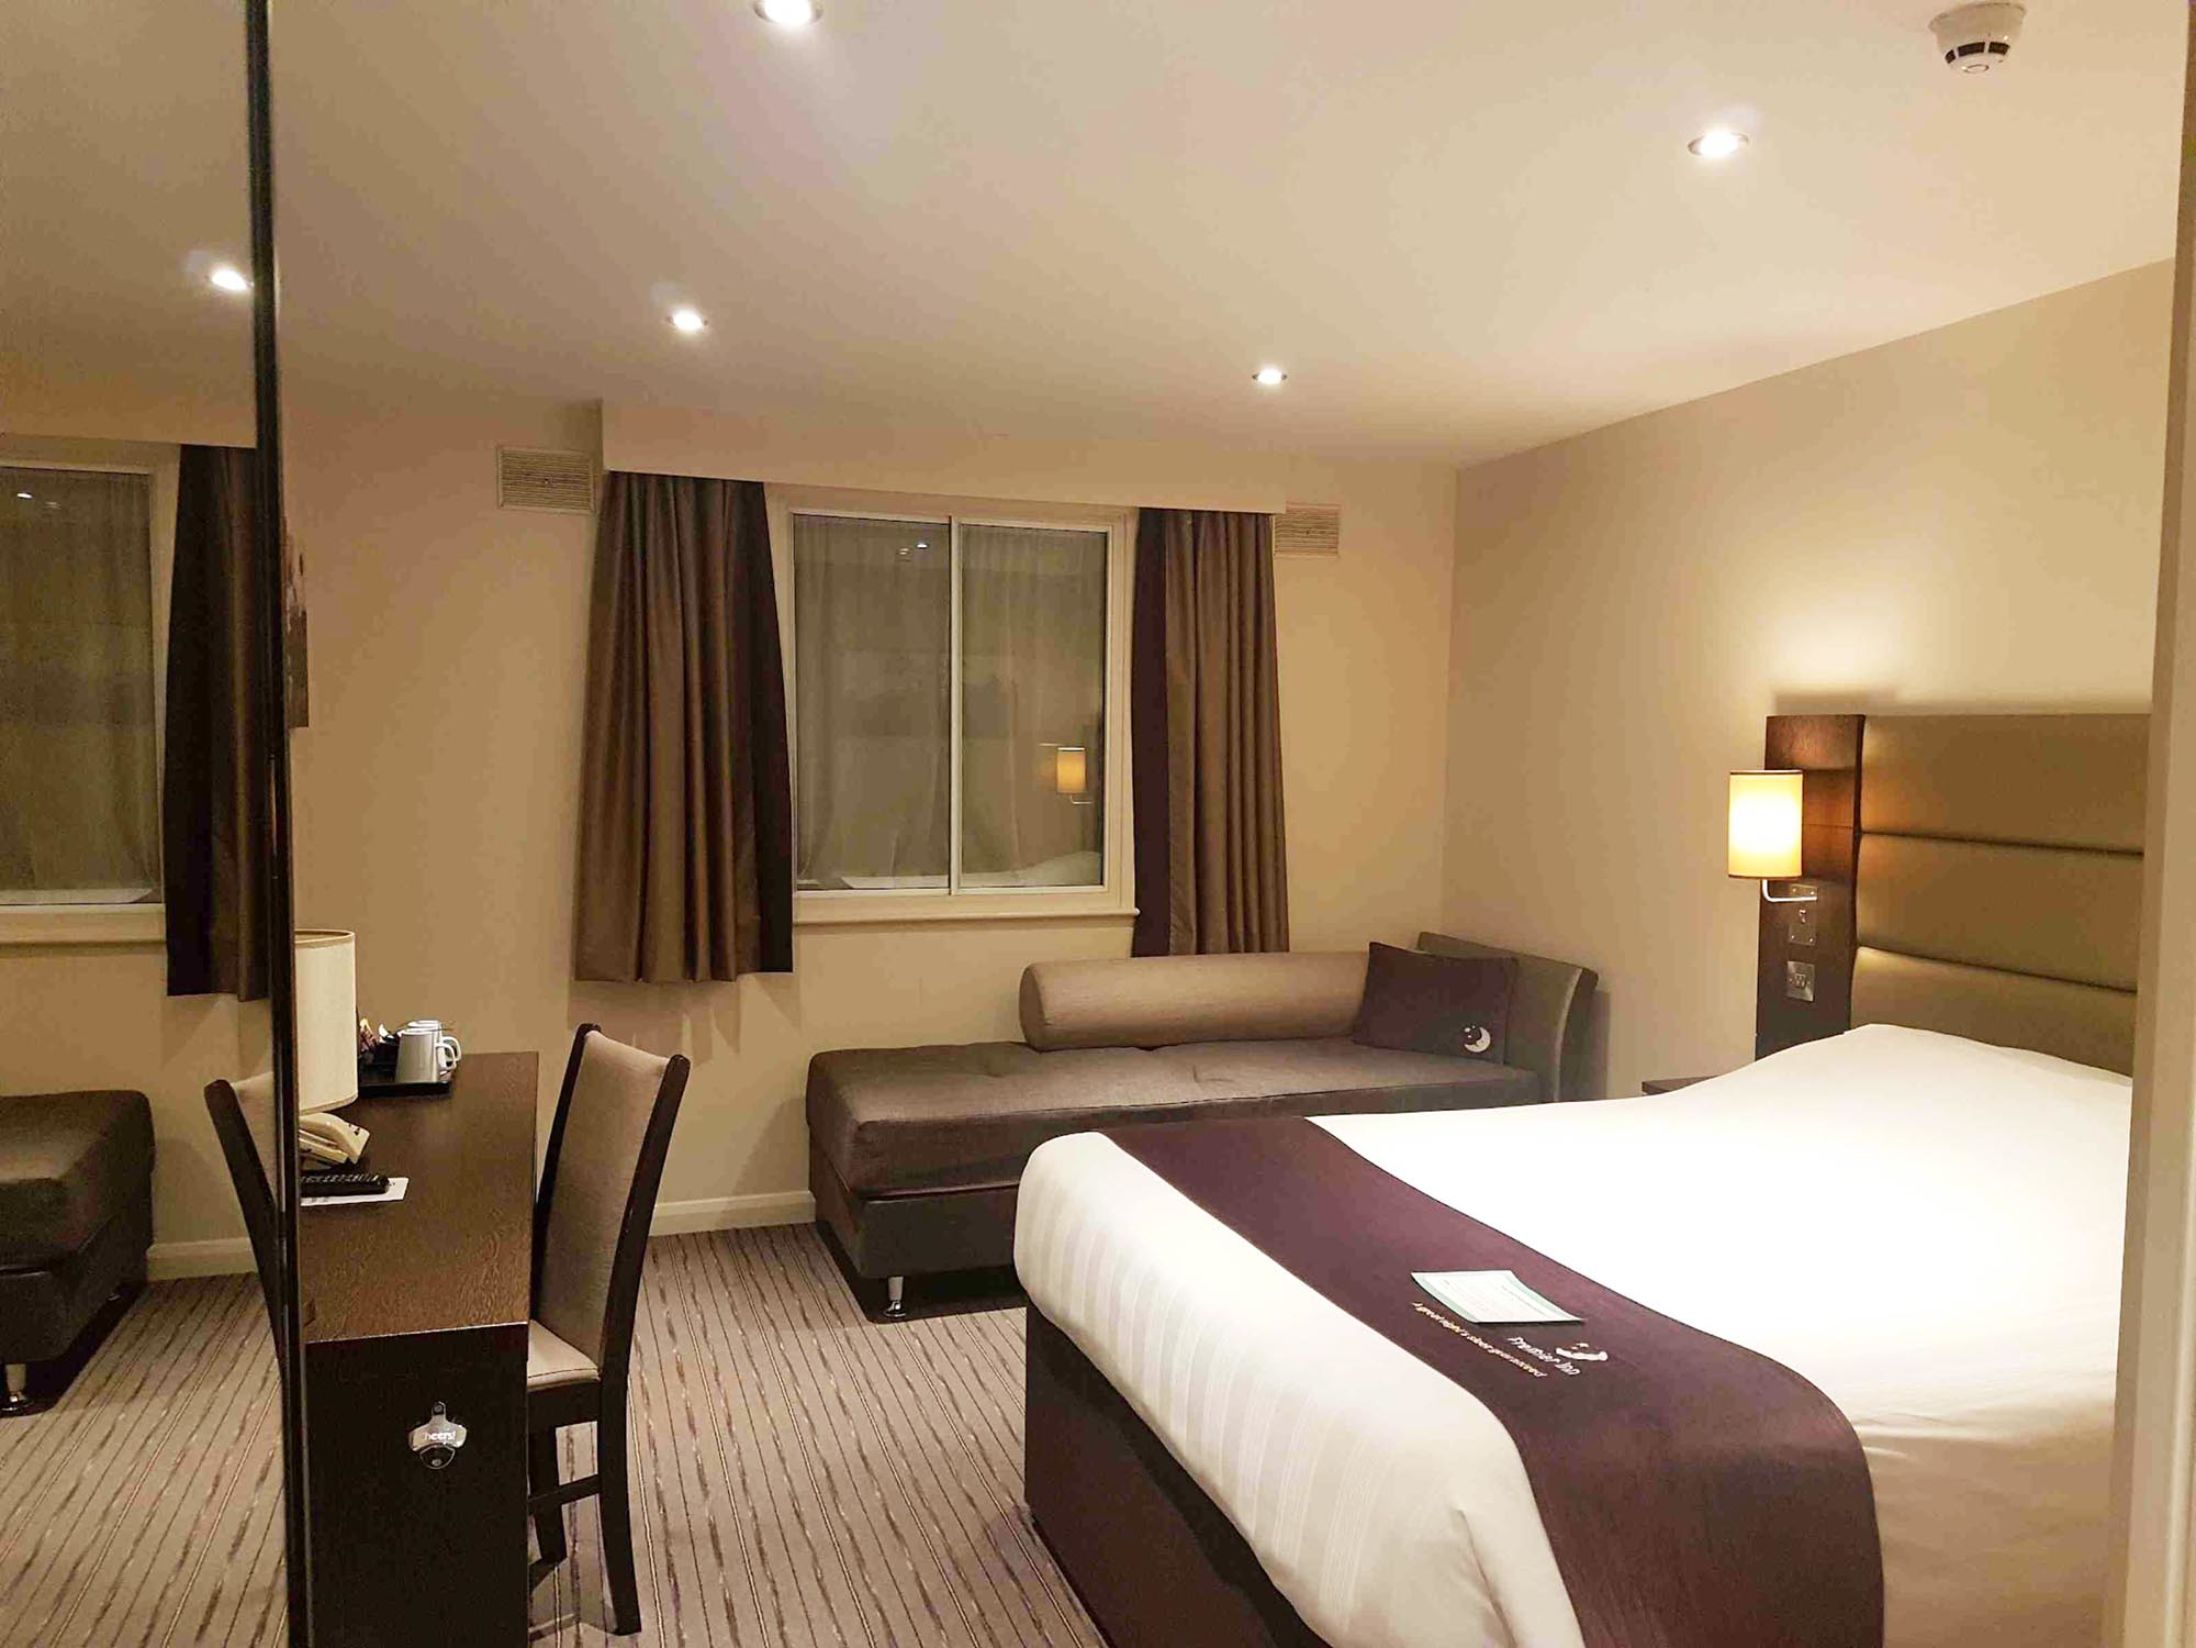 Best Hotels in Southampton - Premier Inn Southampton City Centre